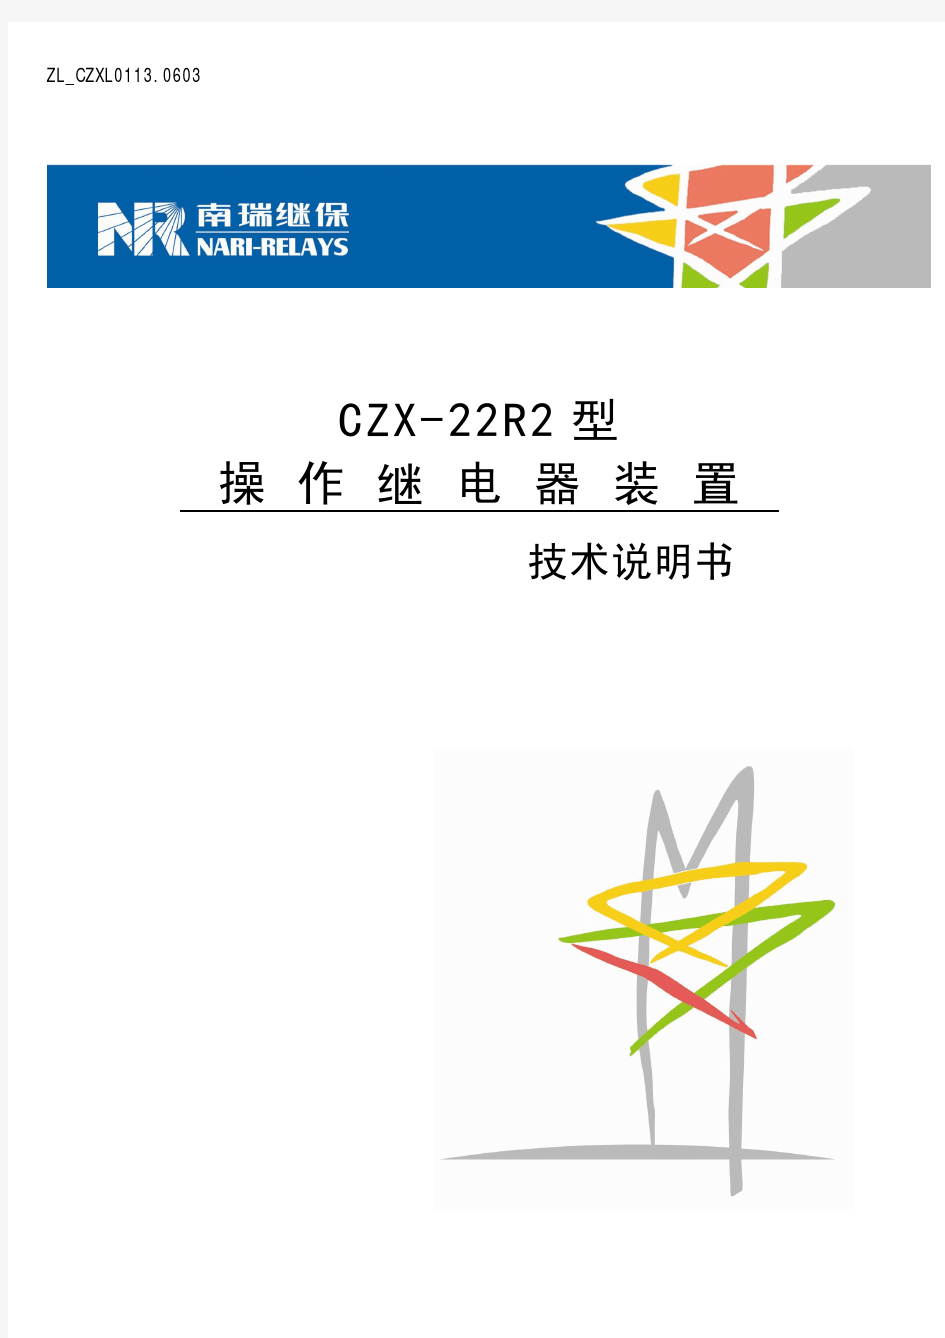 ZL_CZXL0113.0603 CZX-22R2型操作继电器装置技术说明书